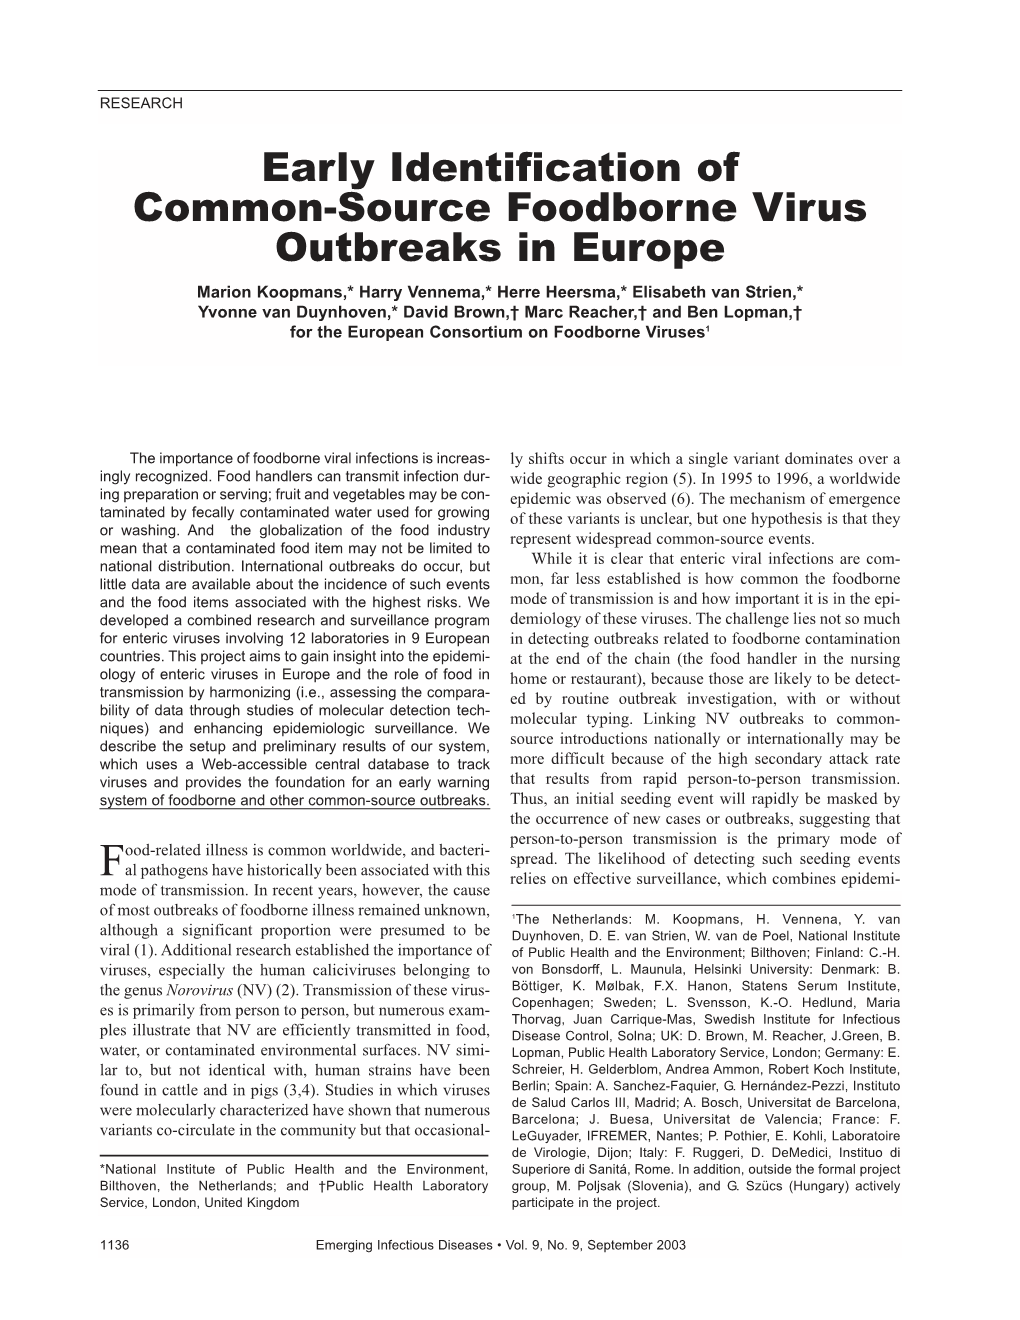 Early Identification of Common-Source Foodborne Virus